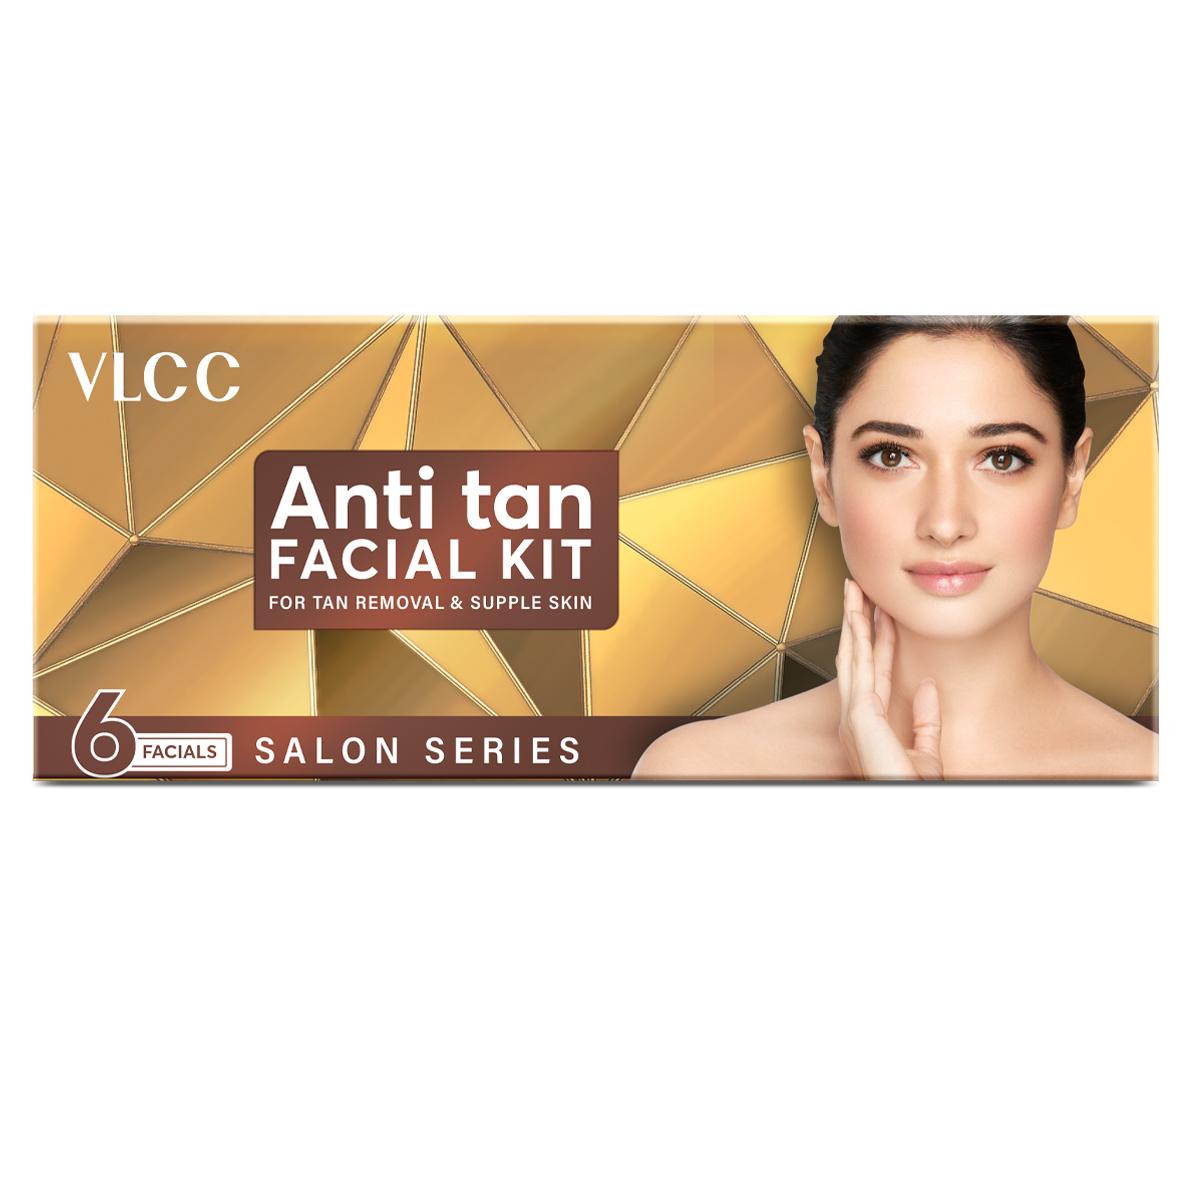 Say Goodbye to Tan Lines with VLCC Salon Anti Tan Facial Kit